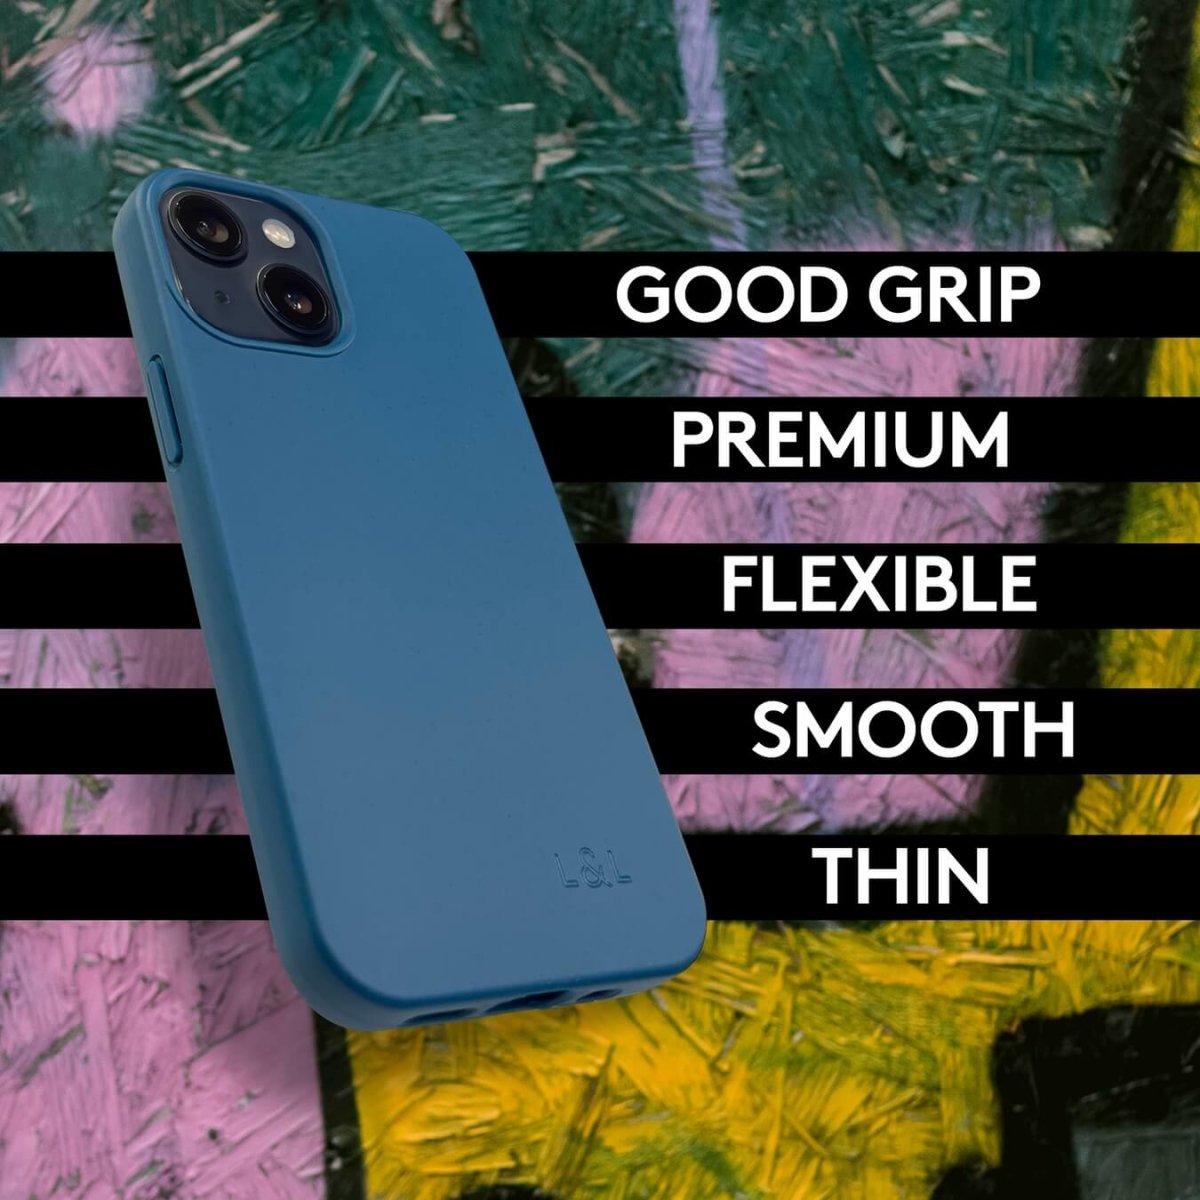 Biodegradable iPhone 13 Mini Case - Deep Blue - Loam & Lore